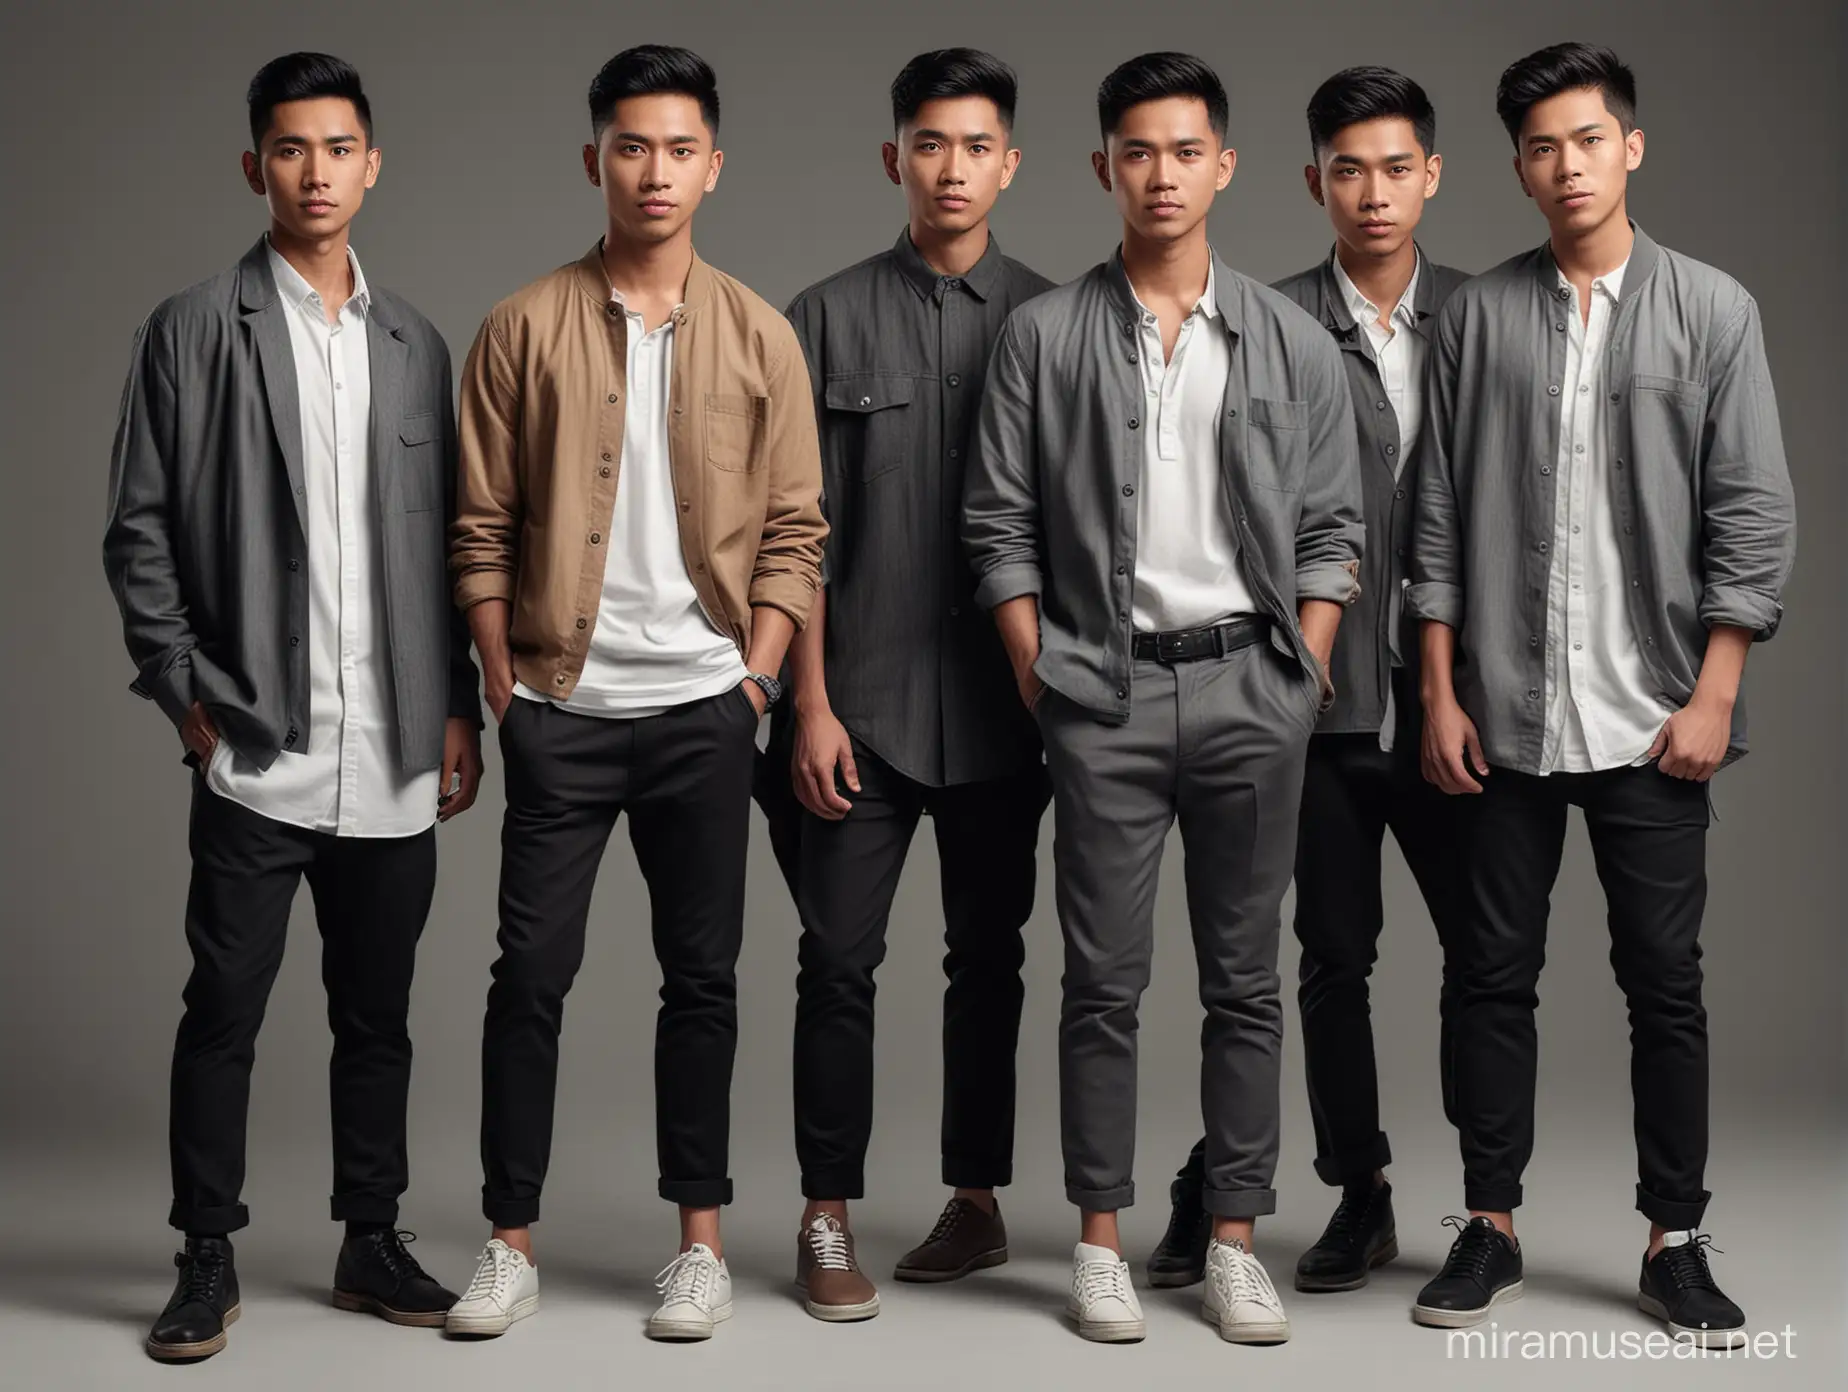 foto full body 6 orang pria, realistik di studio background polos, foto group fashion, wajah indonesia